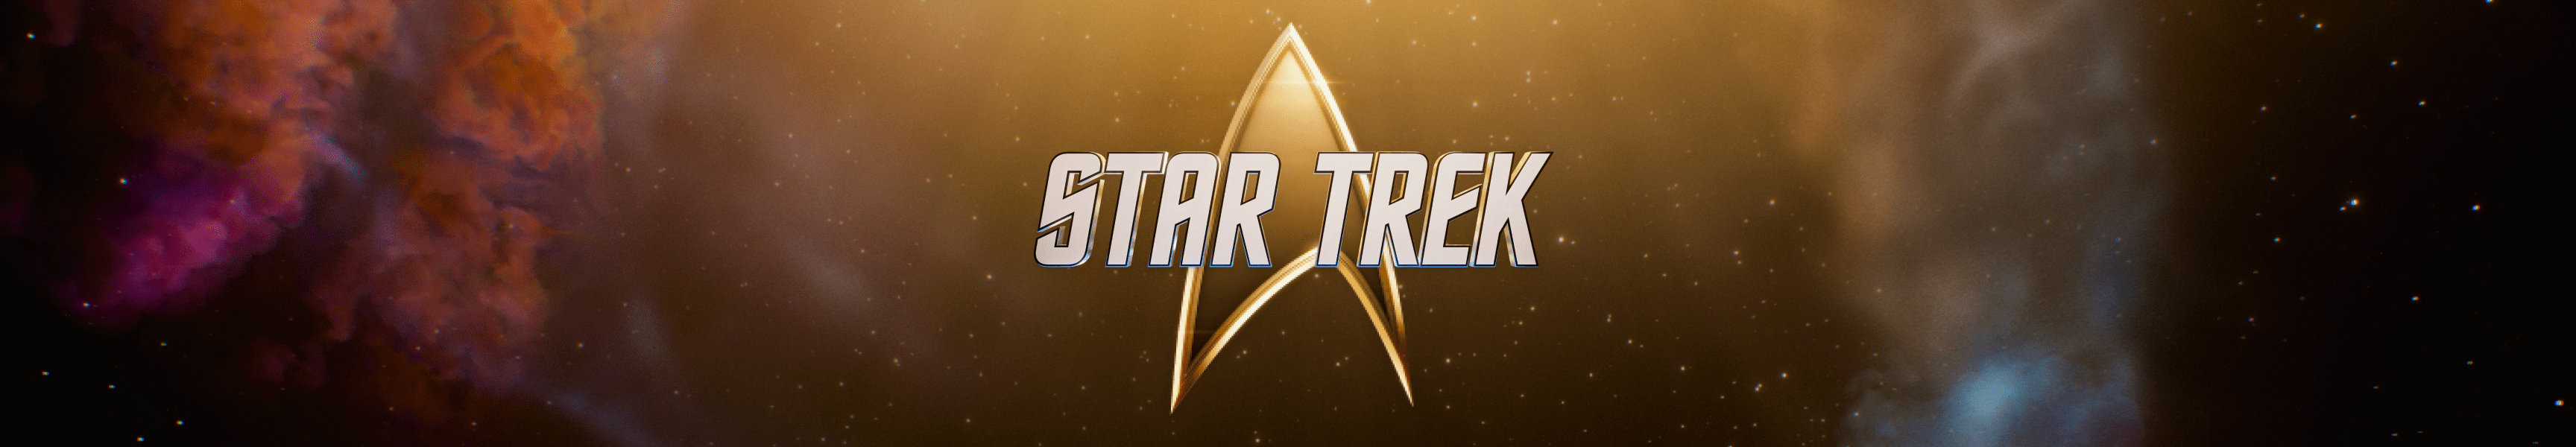 Accesorios tecnológicos de Star Trek